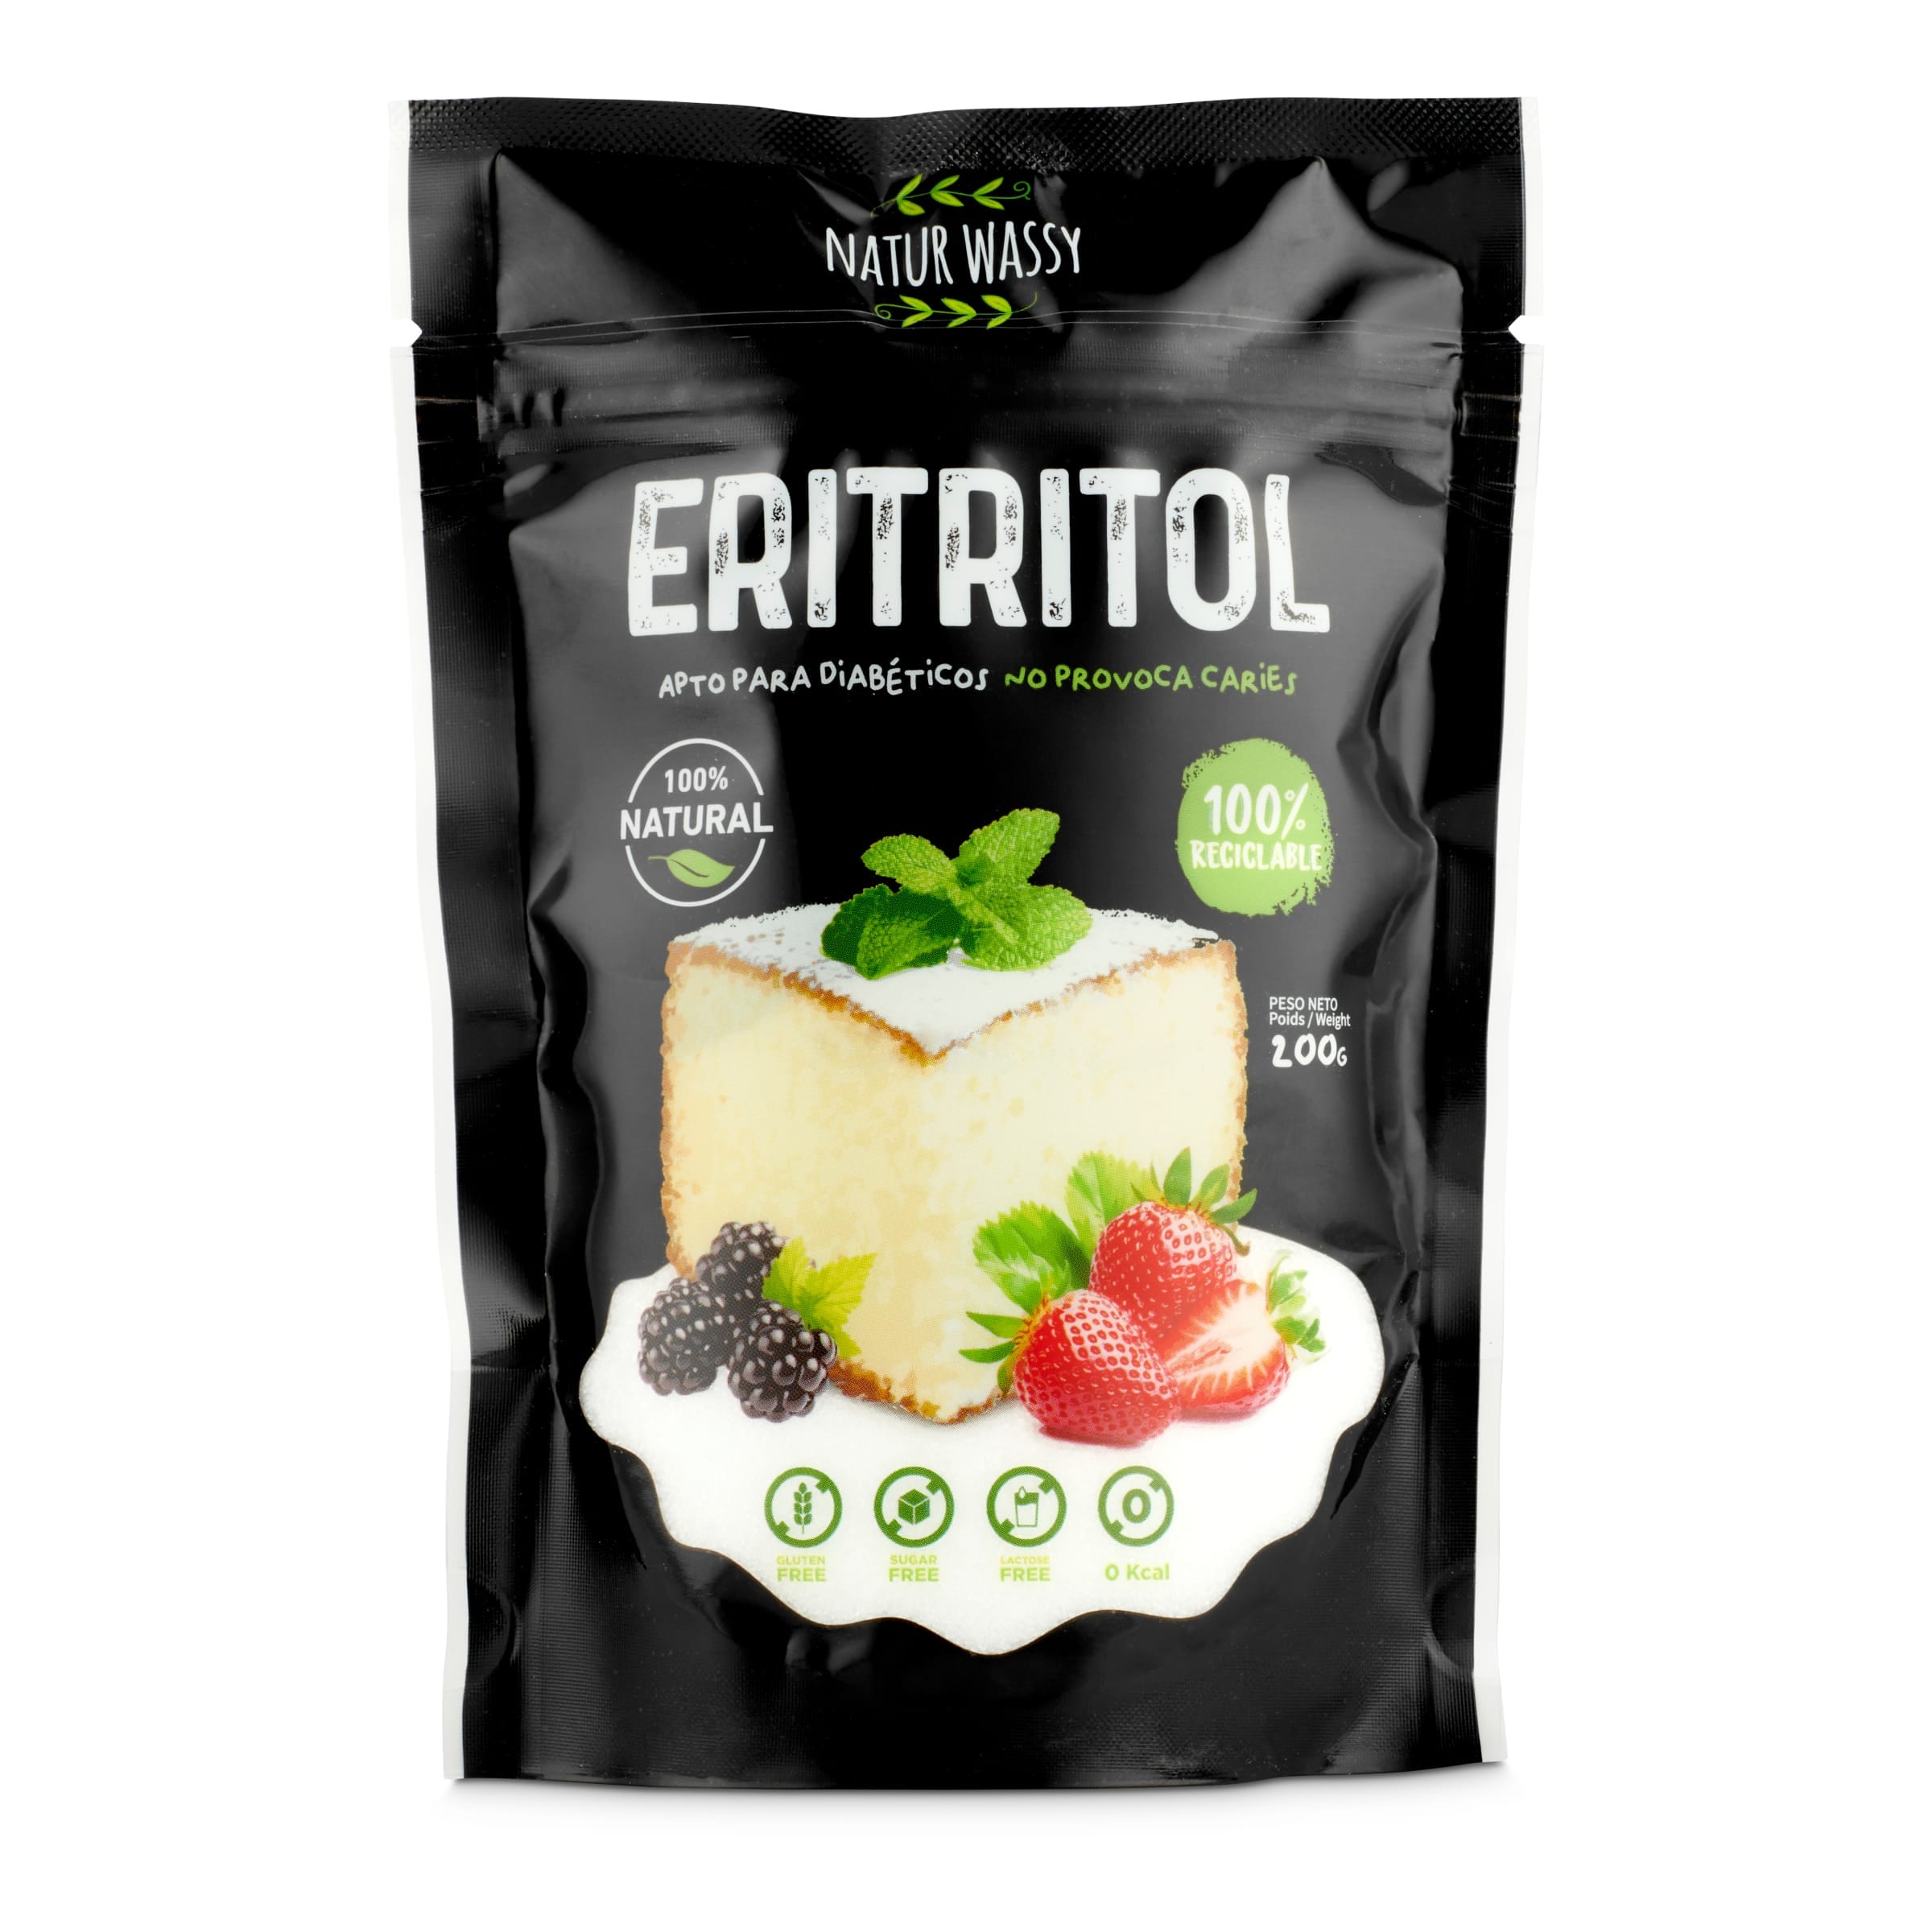 Eritritol Natur Wassy bolsa 200 g - Supermercados DIA